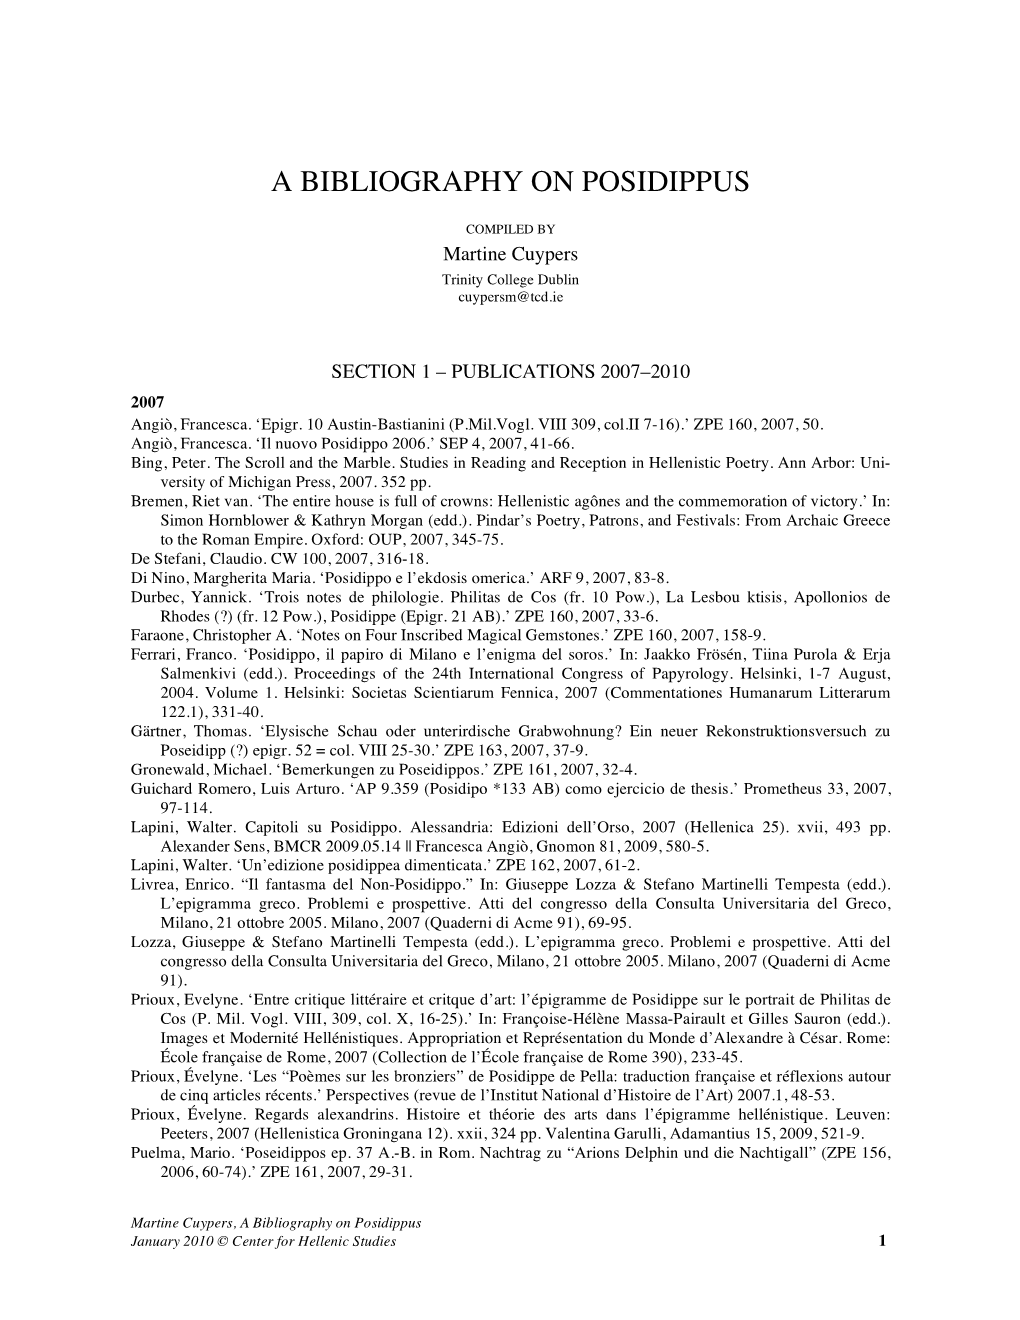 A Bibliography on Posidippus